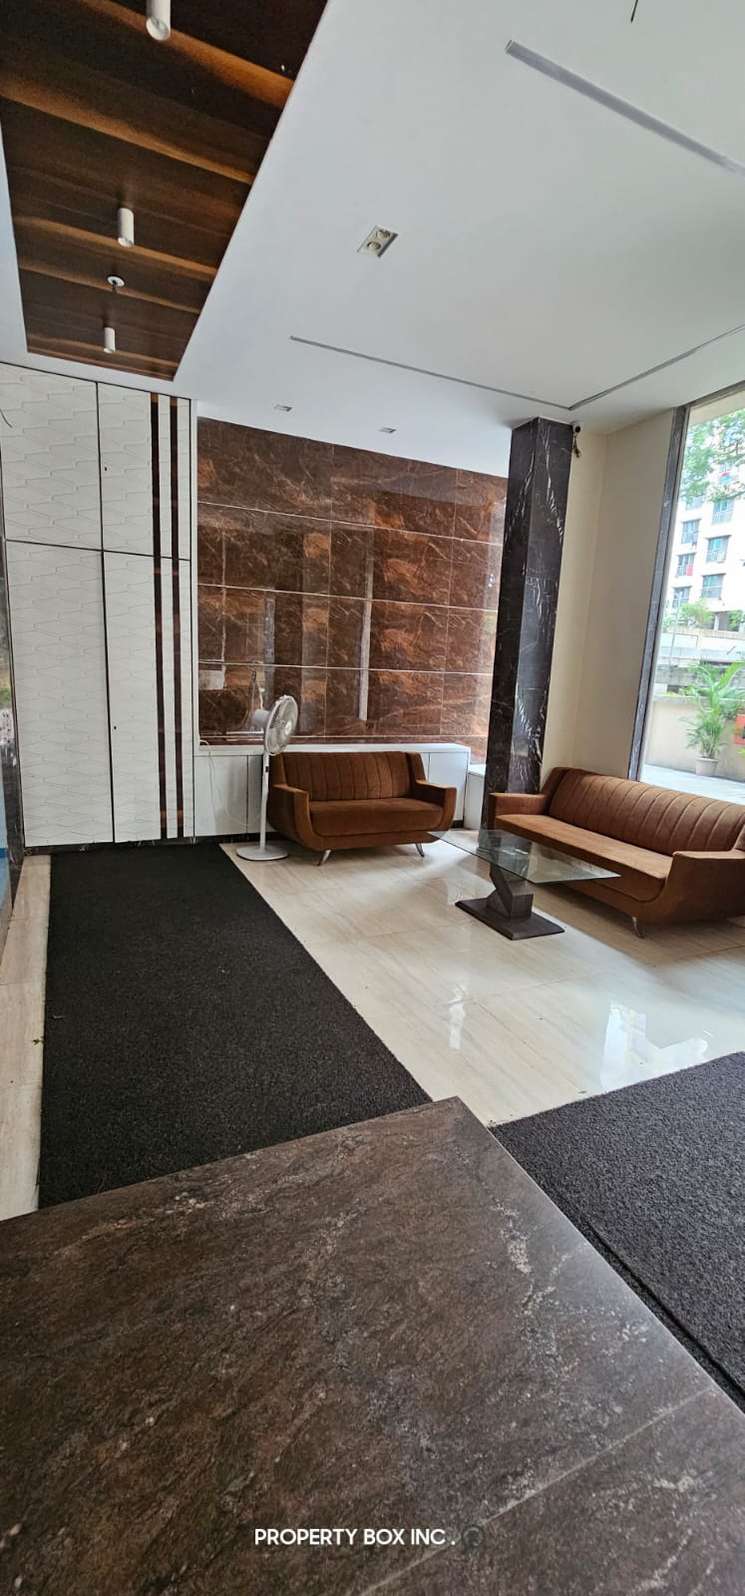 1.5 Bedroom 600 Sq.Ft. Apartment in Ghatkopar East Mumbai